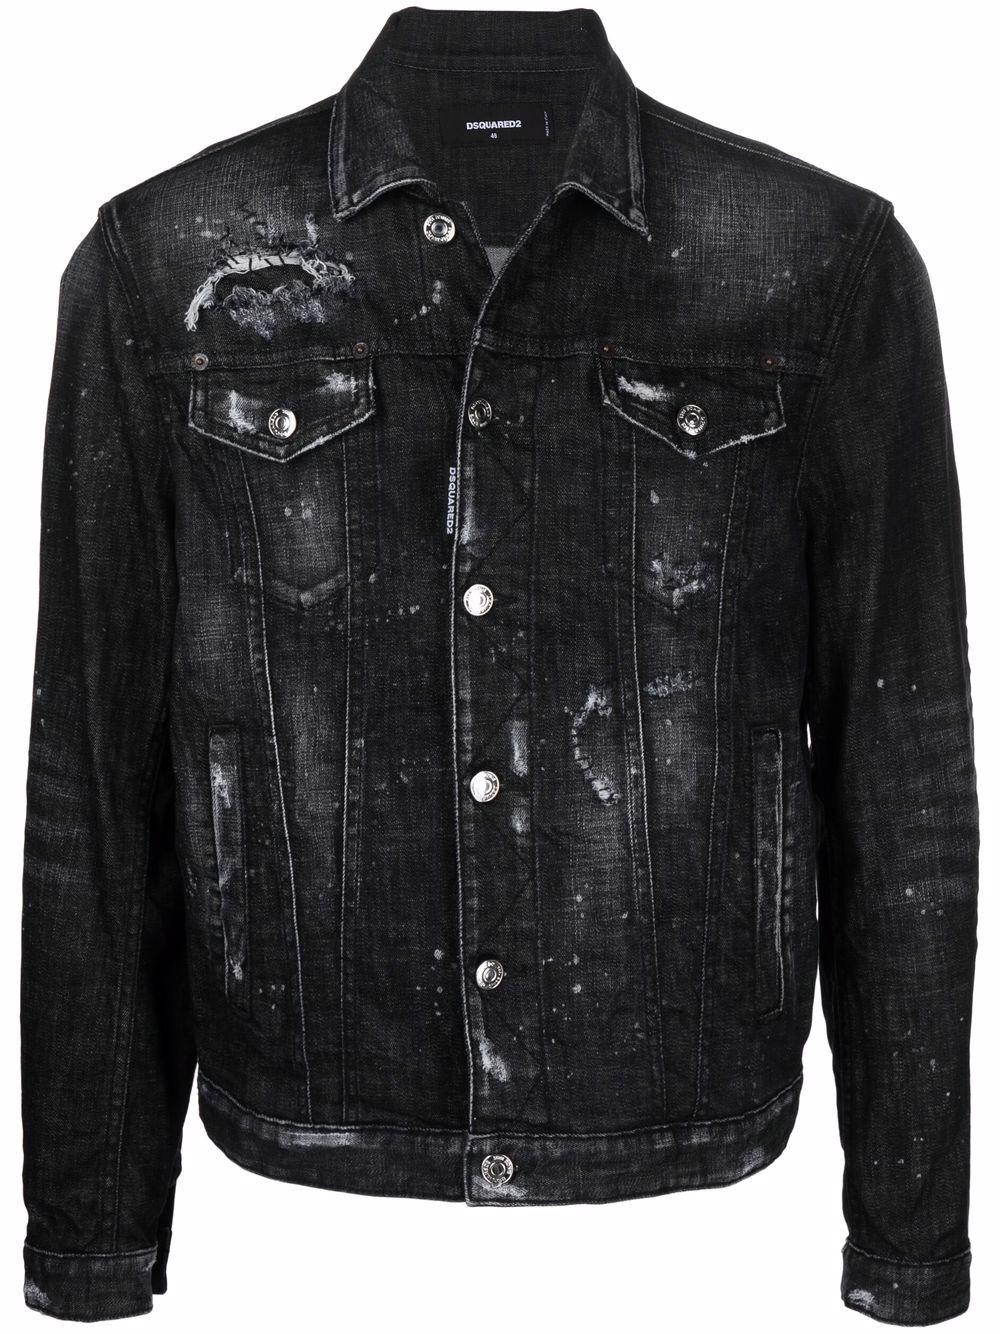 DSquared² Distressed-effect Denim Jacket in Nero (Black) for Men - Save 39%  | Lyst